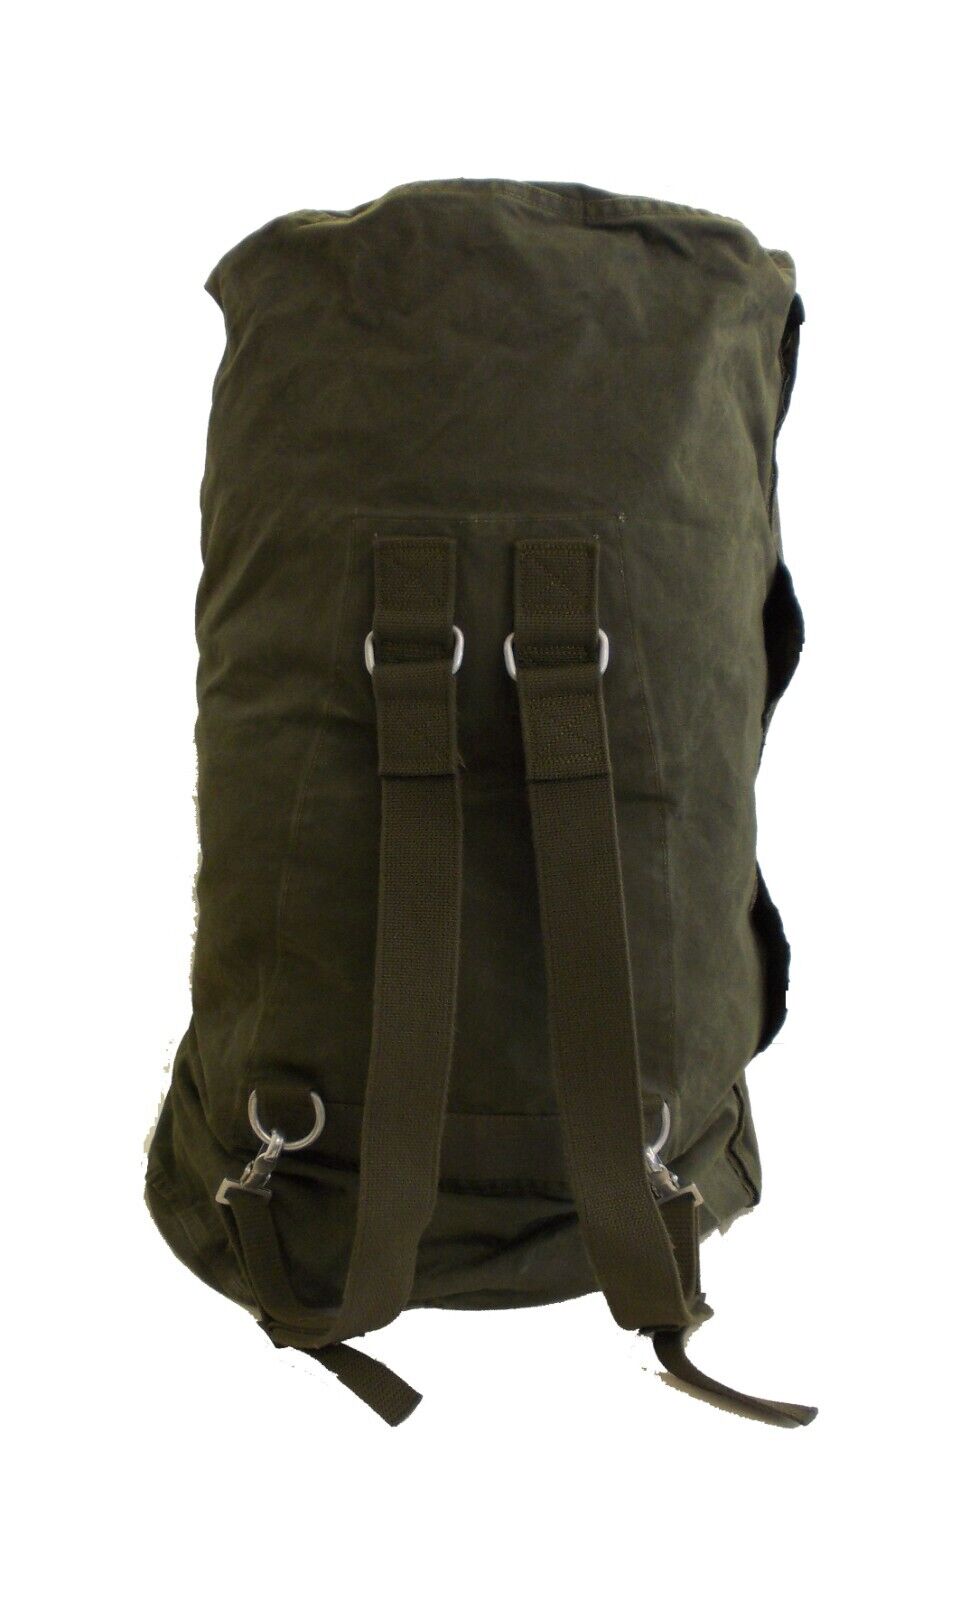 Genuine Issue German Army Military Duffle KitBag Seasack  x2 Shoulder Straps Zip